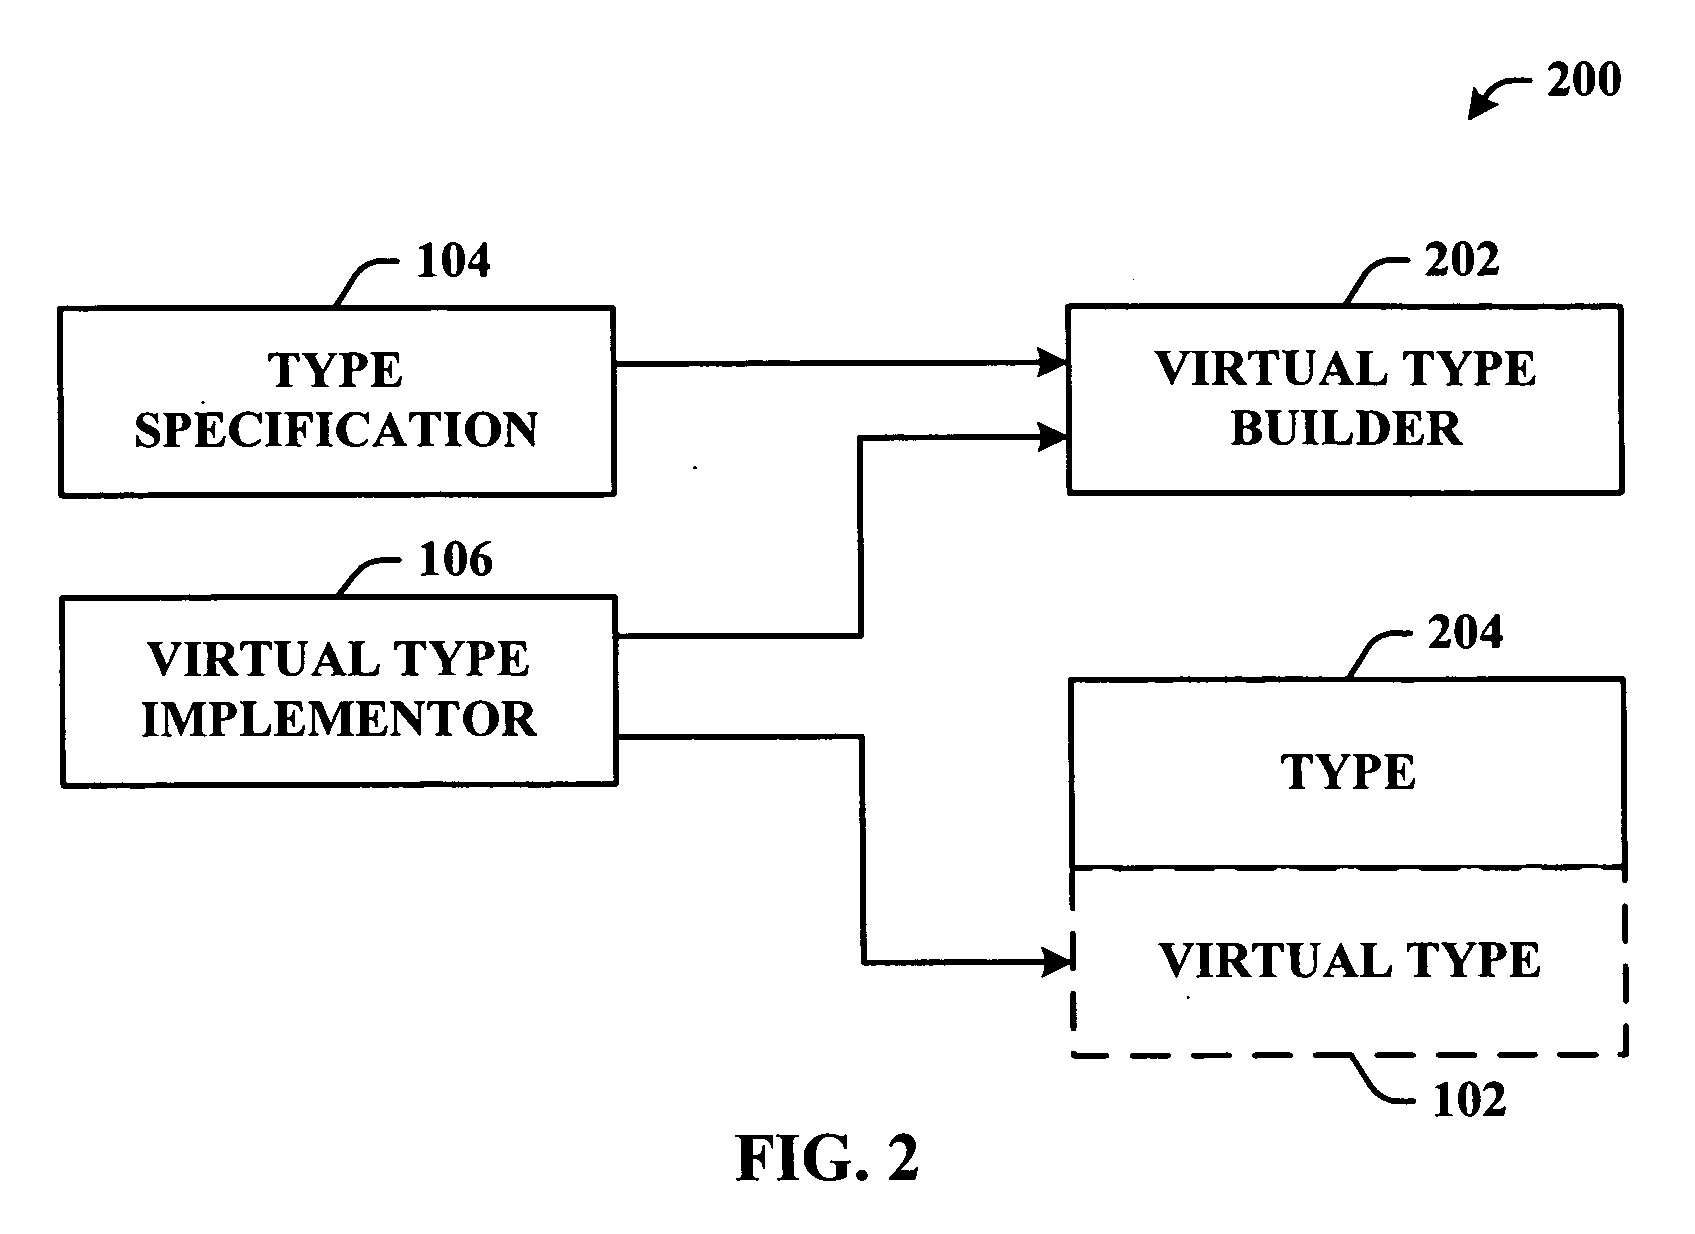 Virtual types